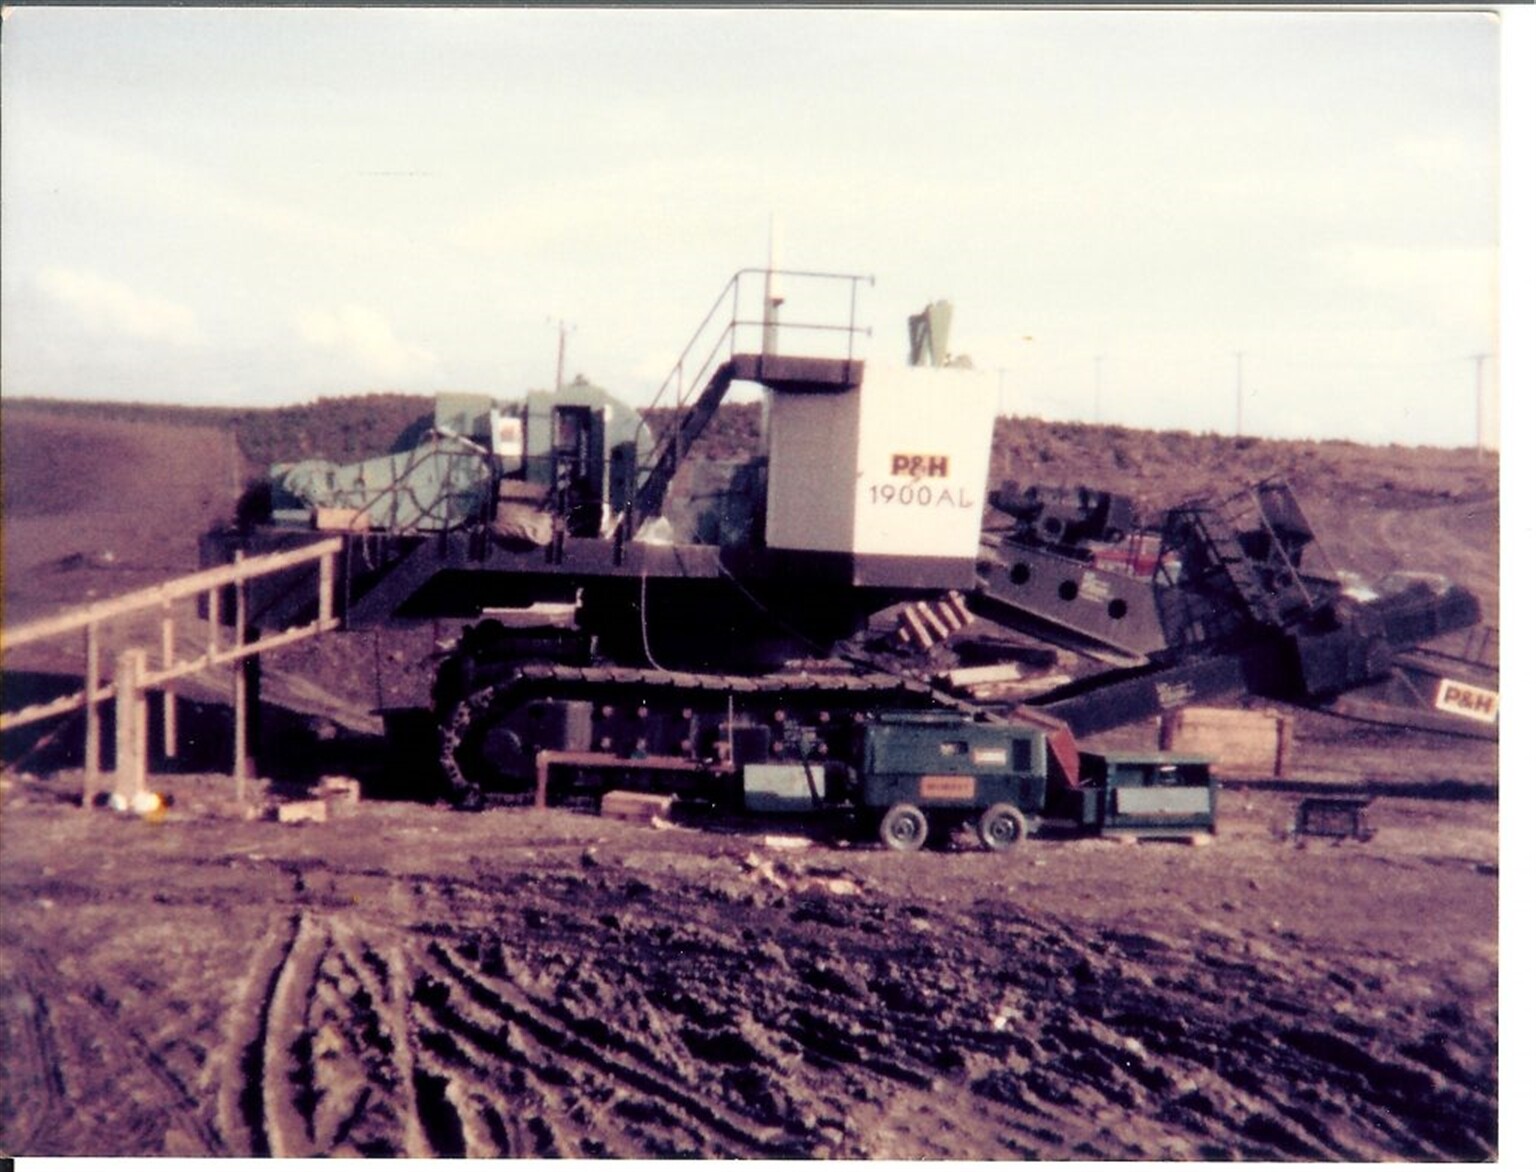 Building Giant Mining Excavators. (Blog Post Re-Visited)